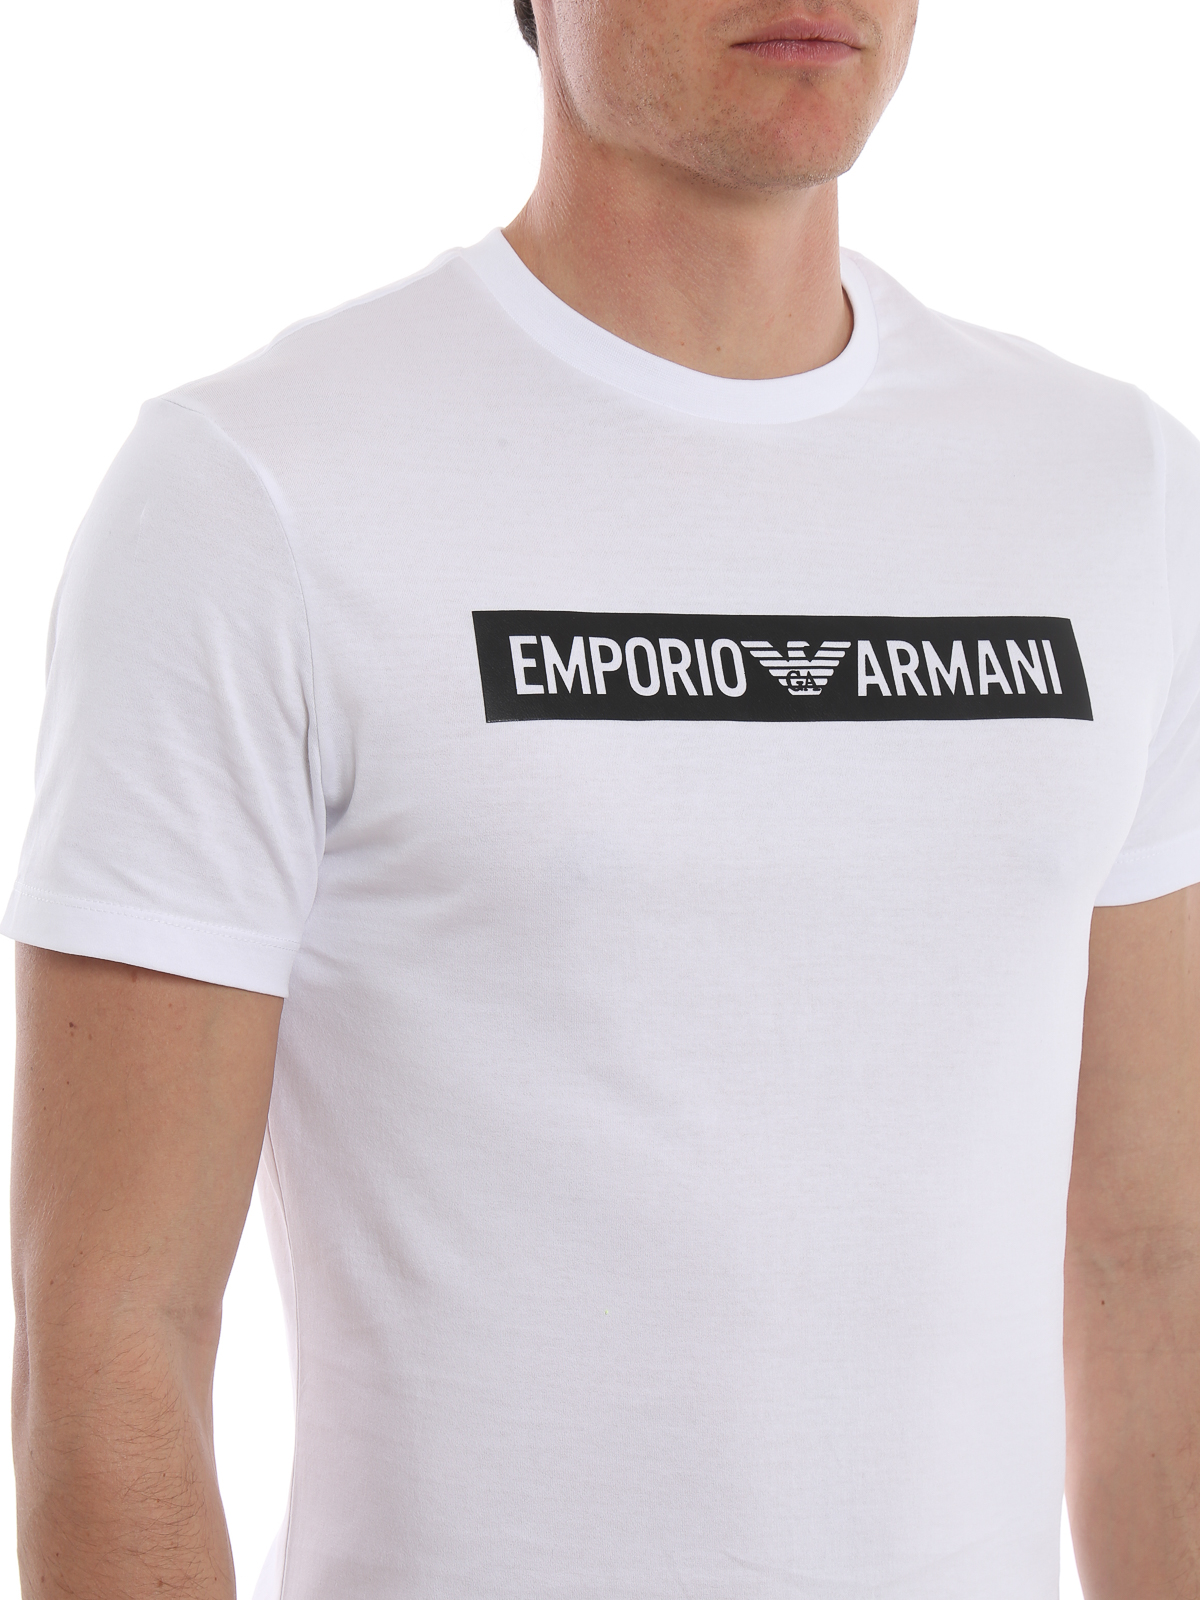 buy armani shirt